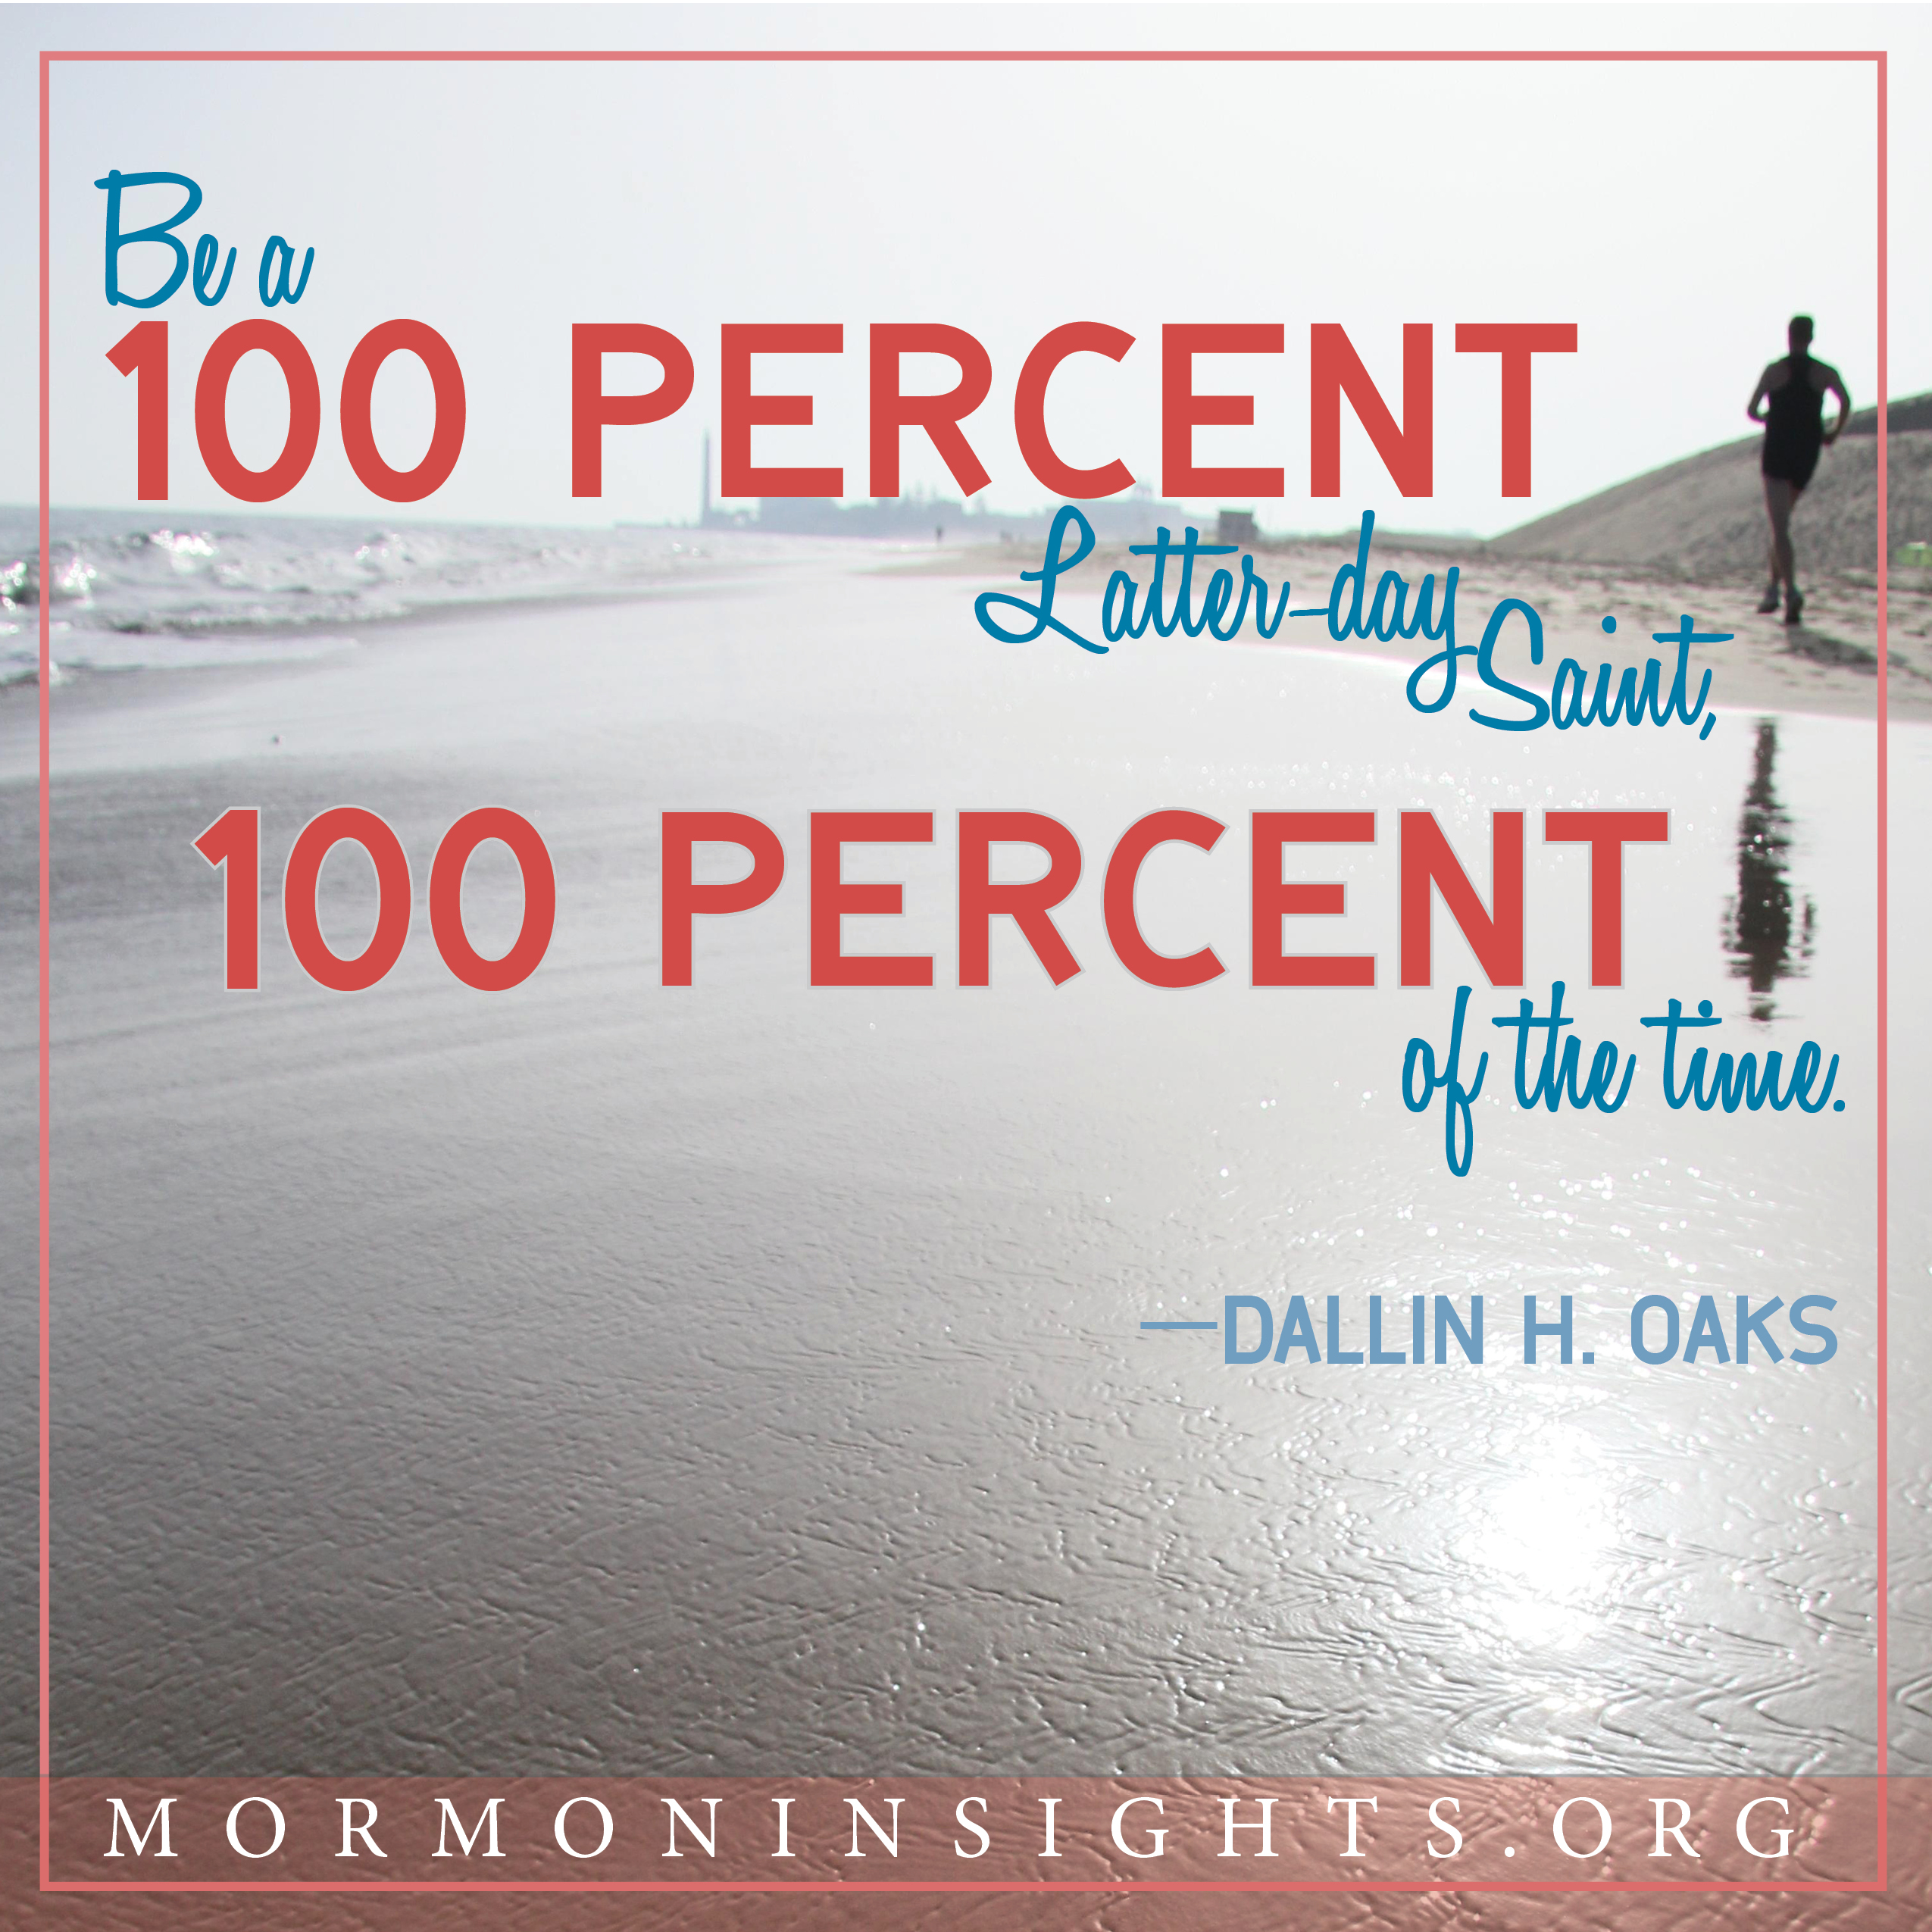 Be a 100 percent Latter-day Saint, 100 percent of the time. - Dallin H. Oaks